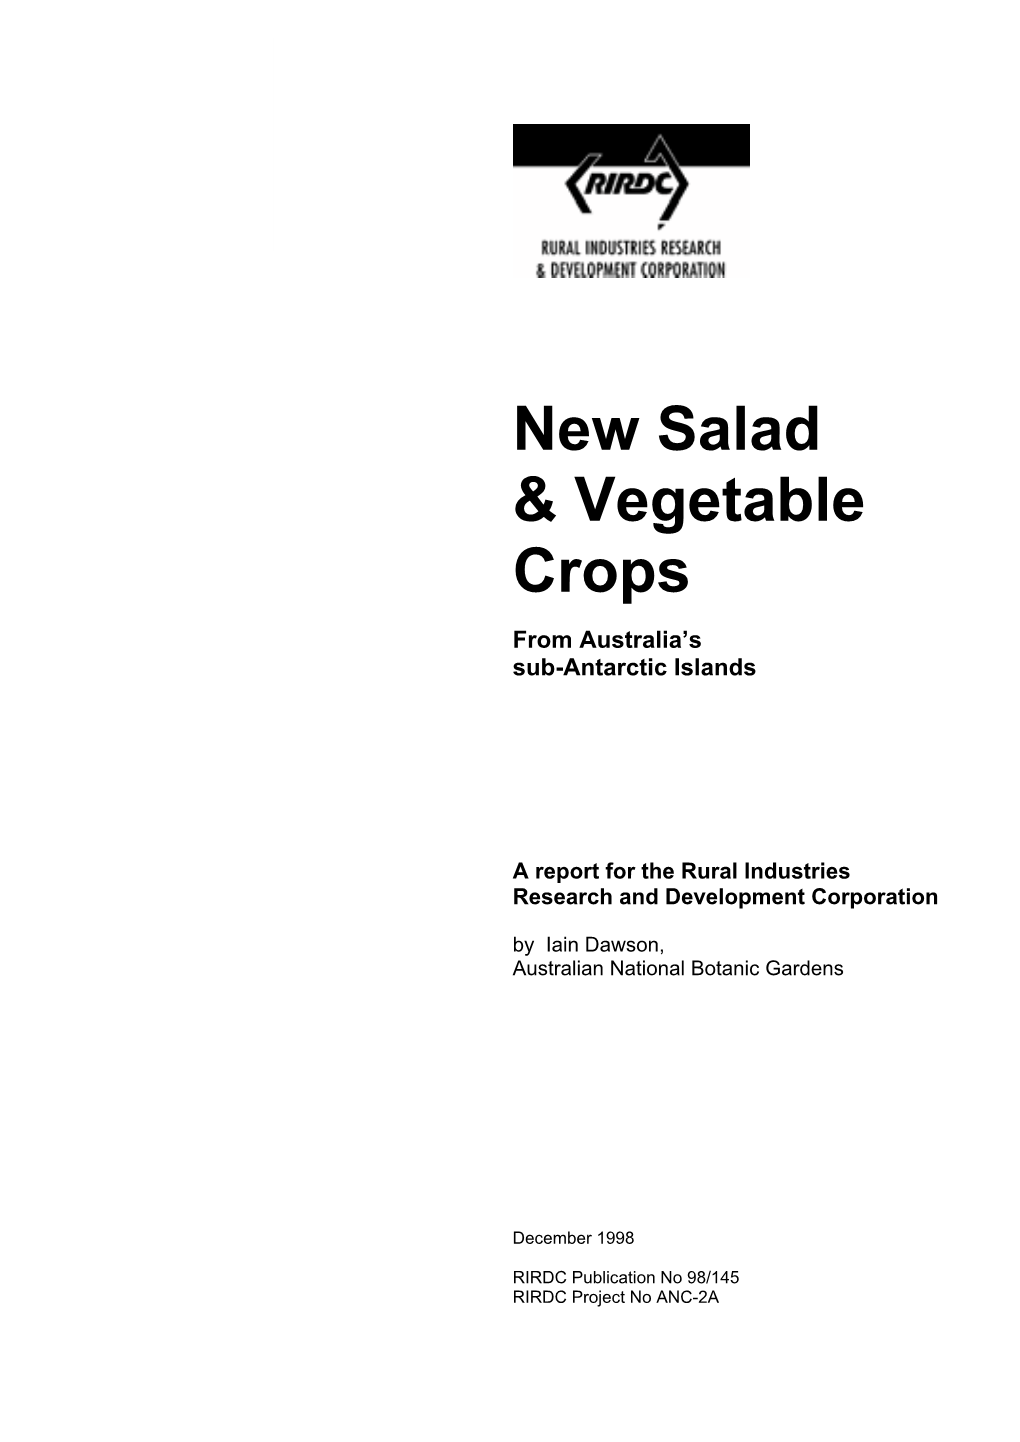 New Salad & Vegetable Crops